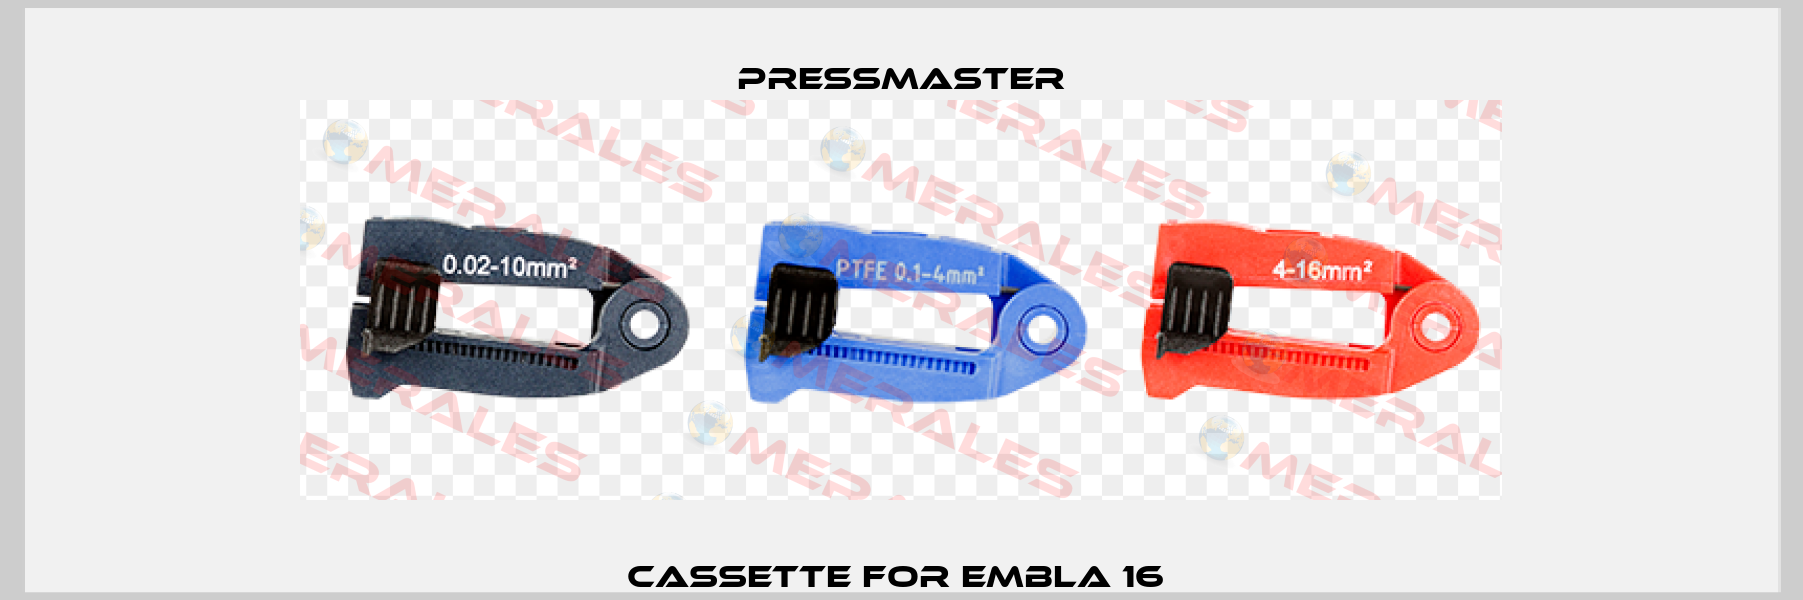 cassette for EMBLA 16  Pressmaster